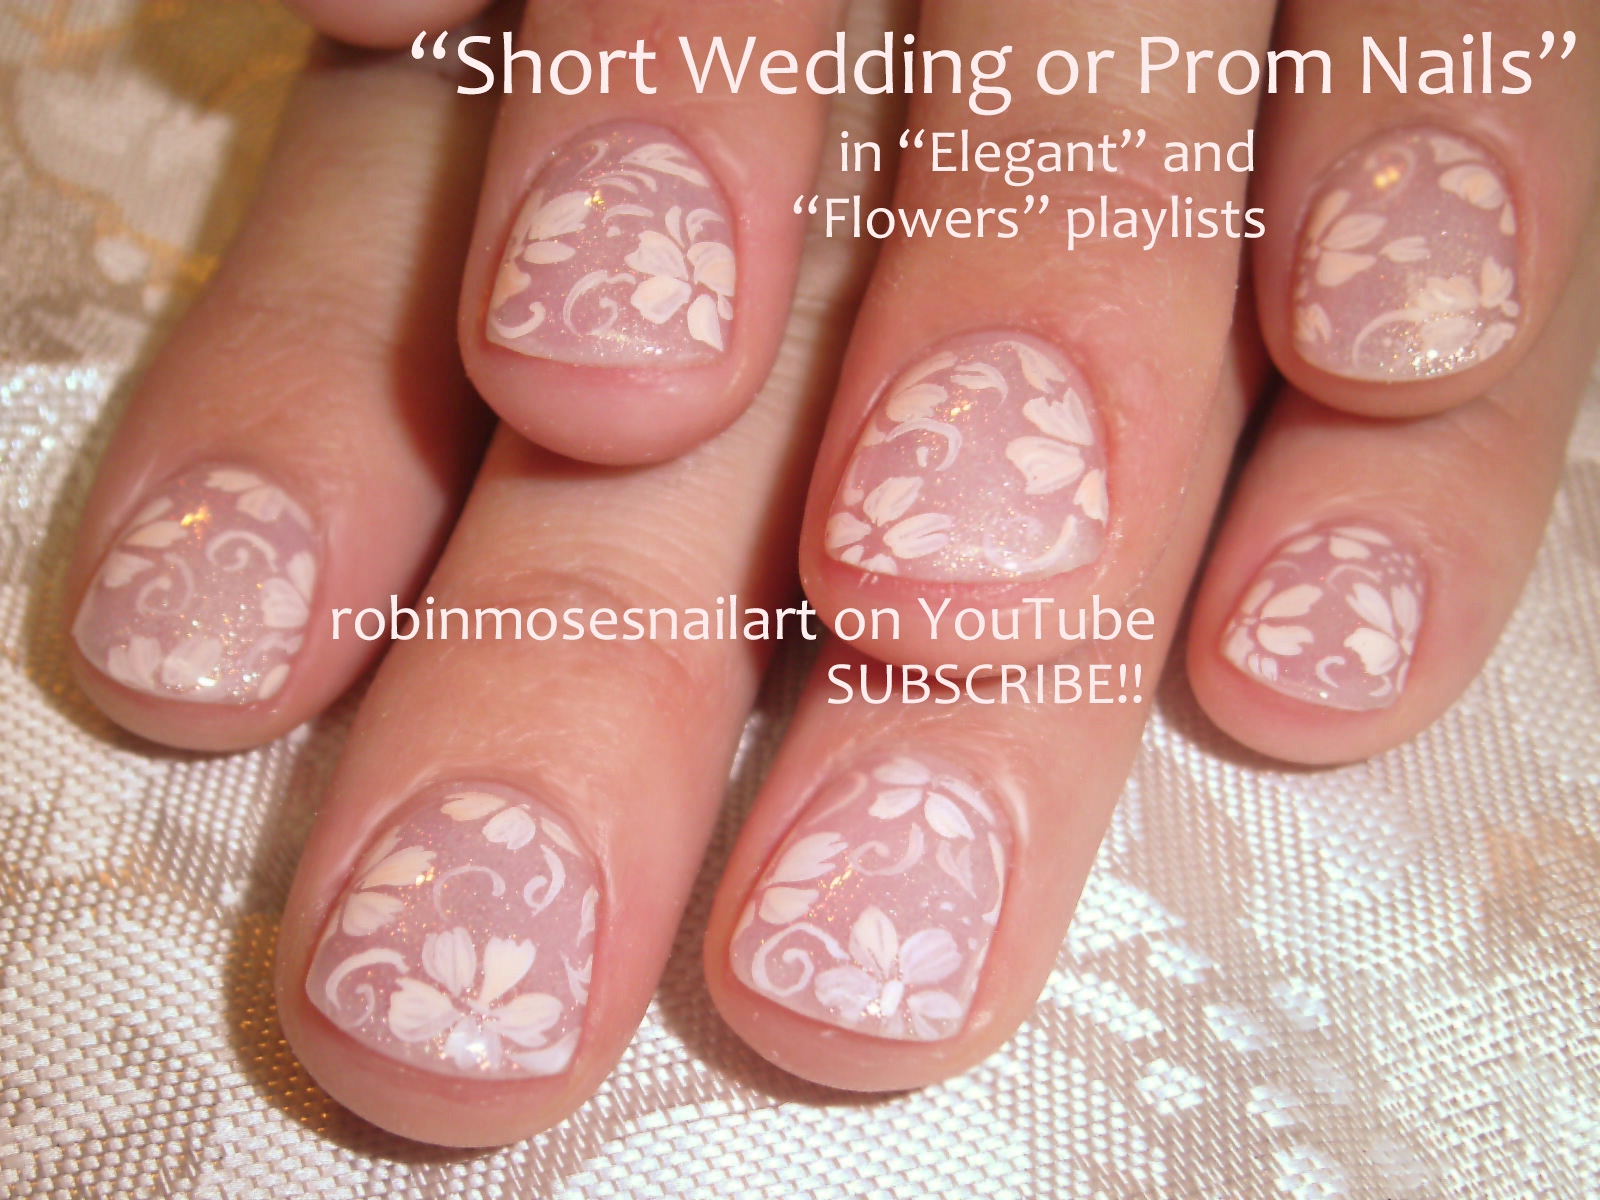 2. Elegant Royal Wedding Nails - wide 2